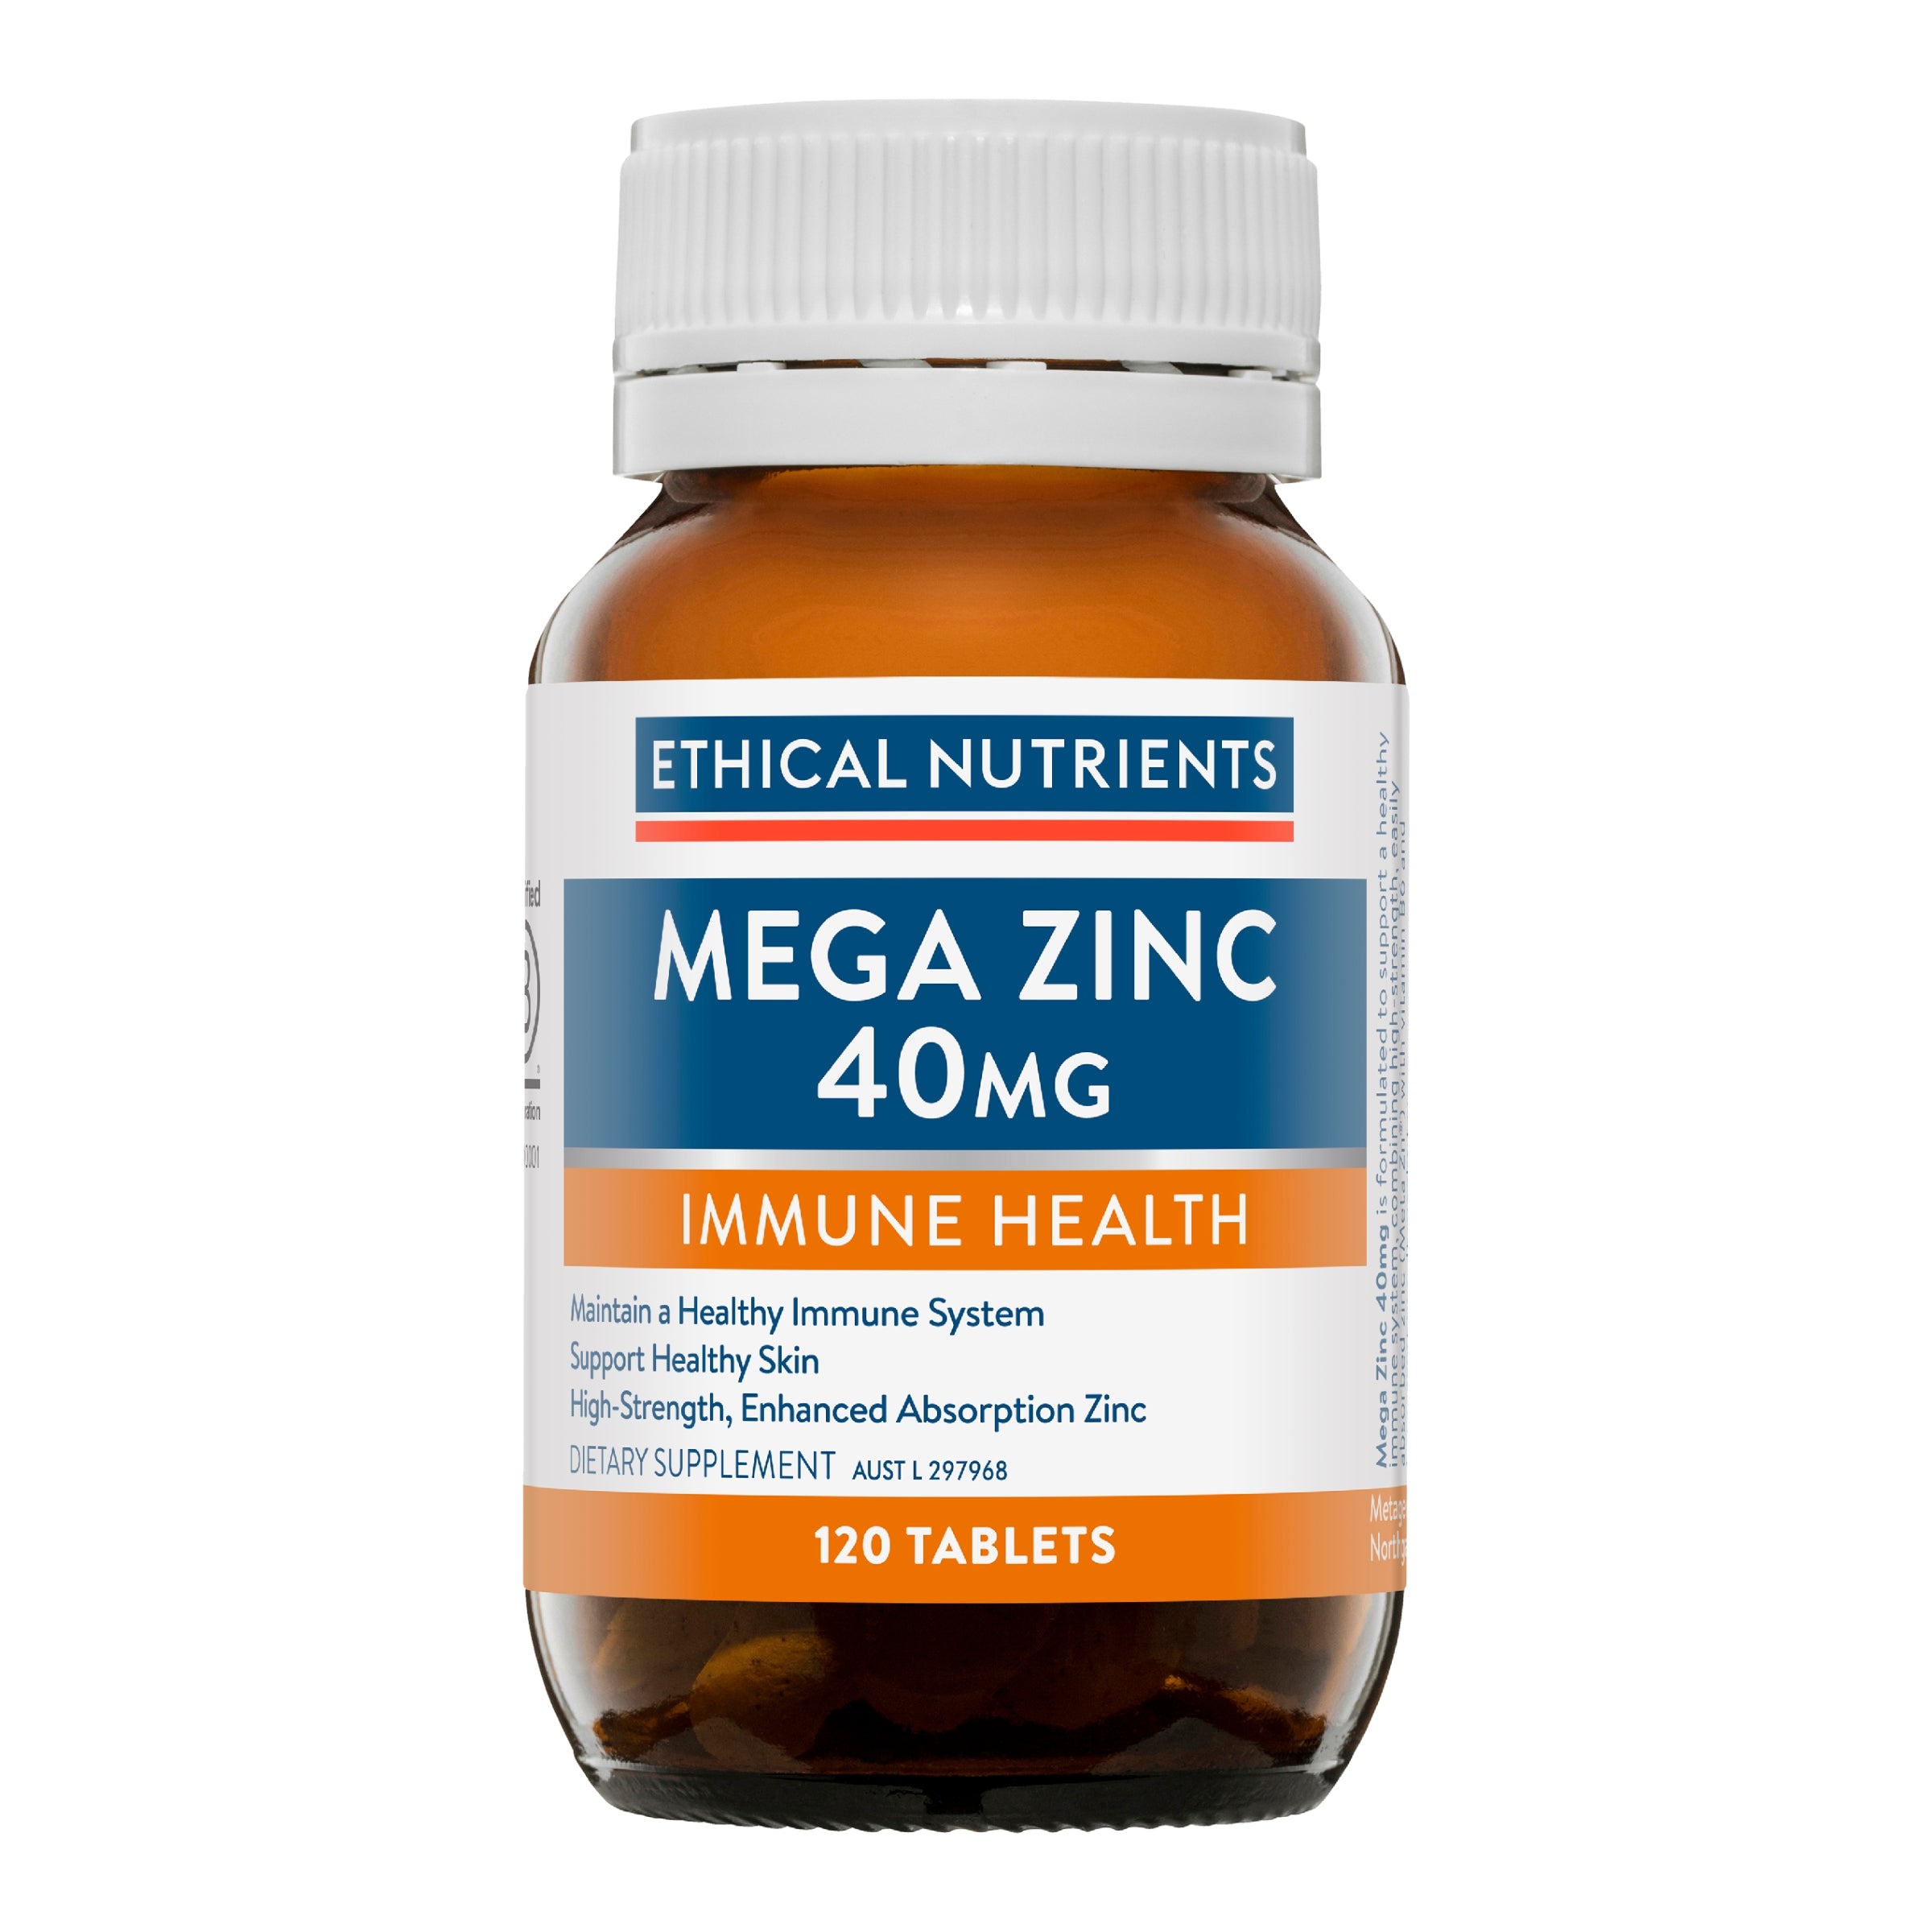 Ethical Nutrients Mega Zinc 40mg 120 Tablets #size_120 tablets